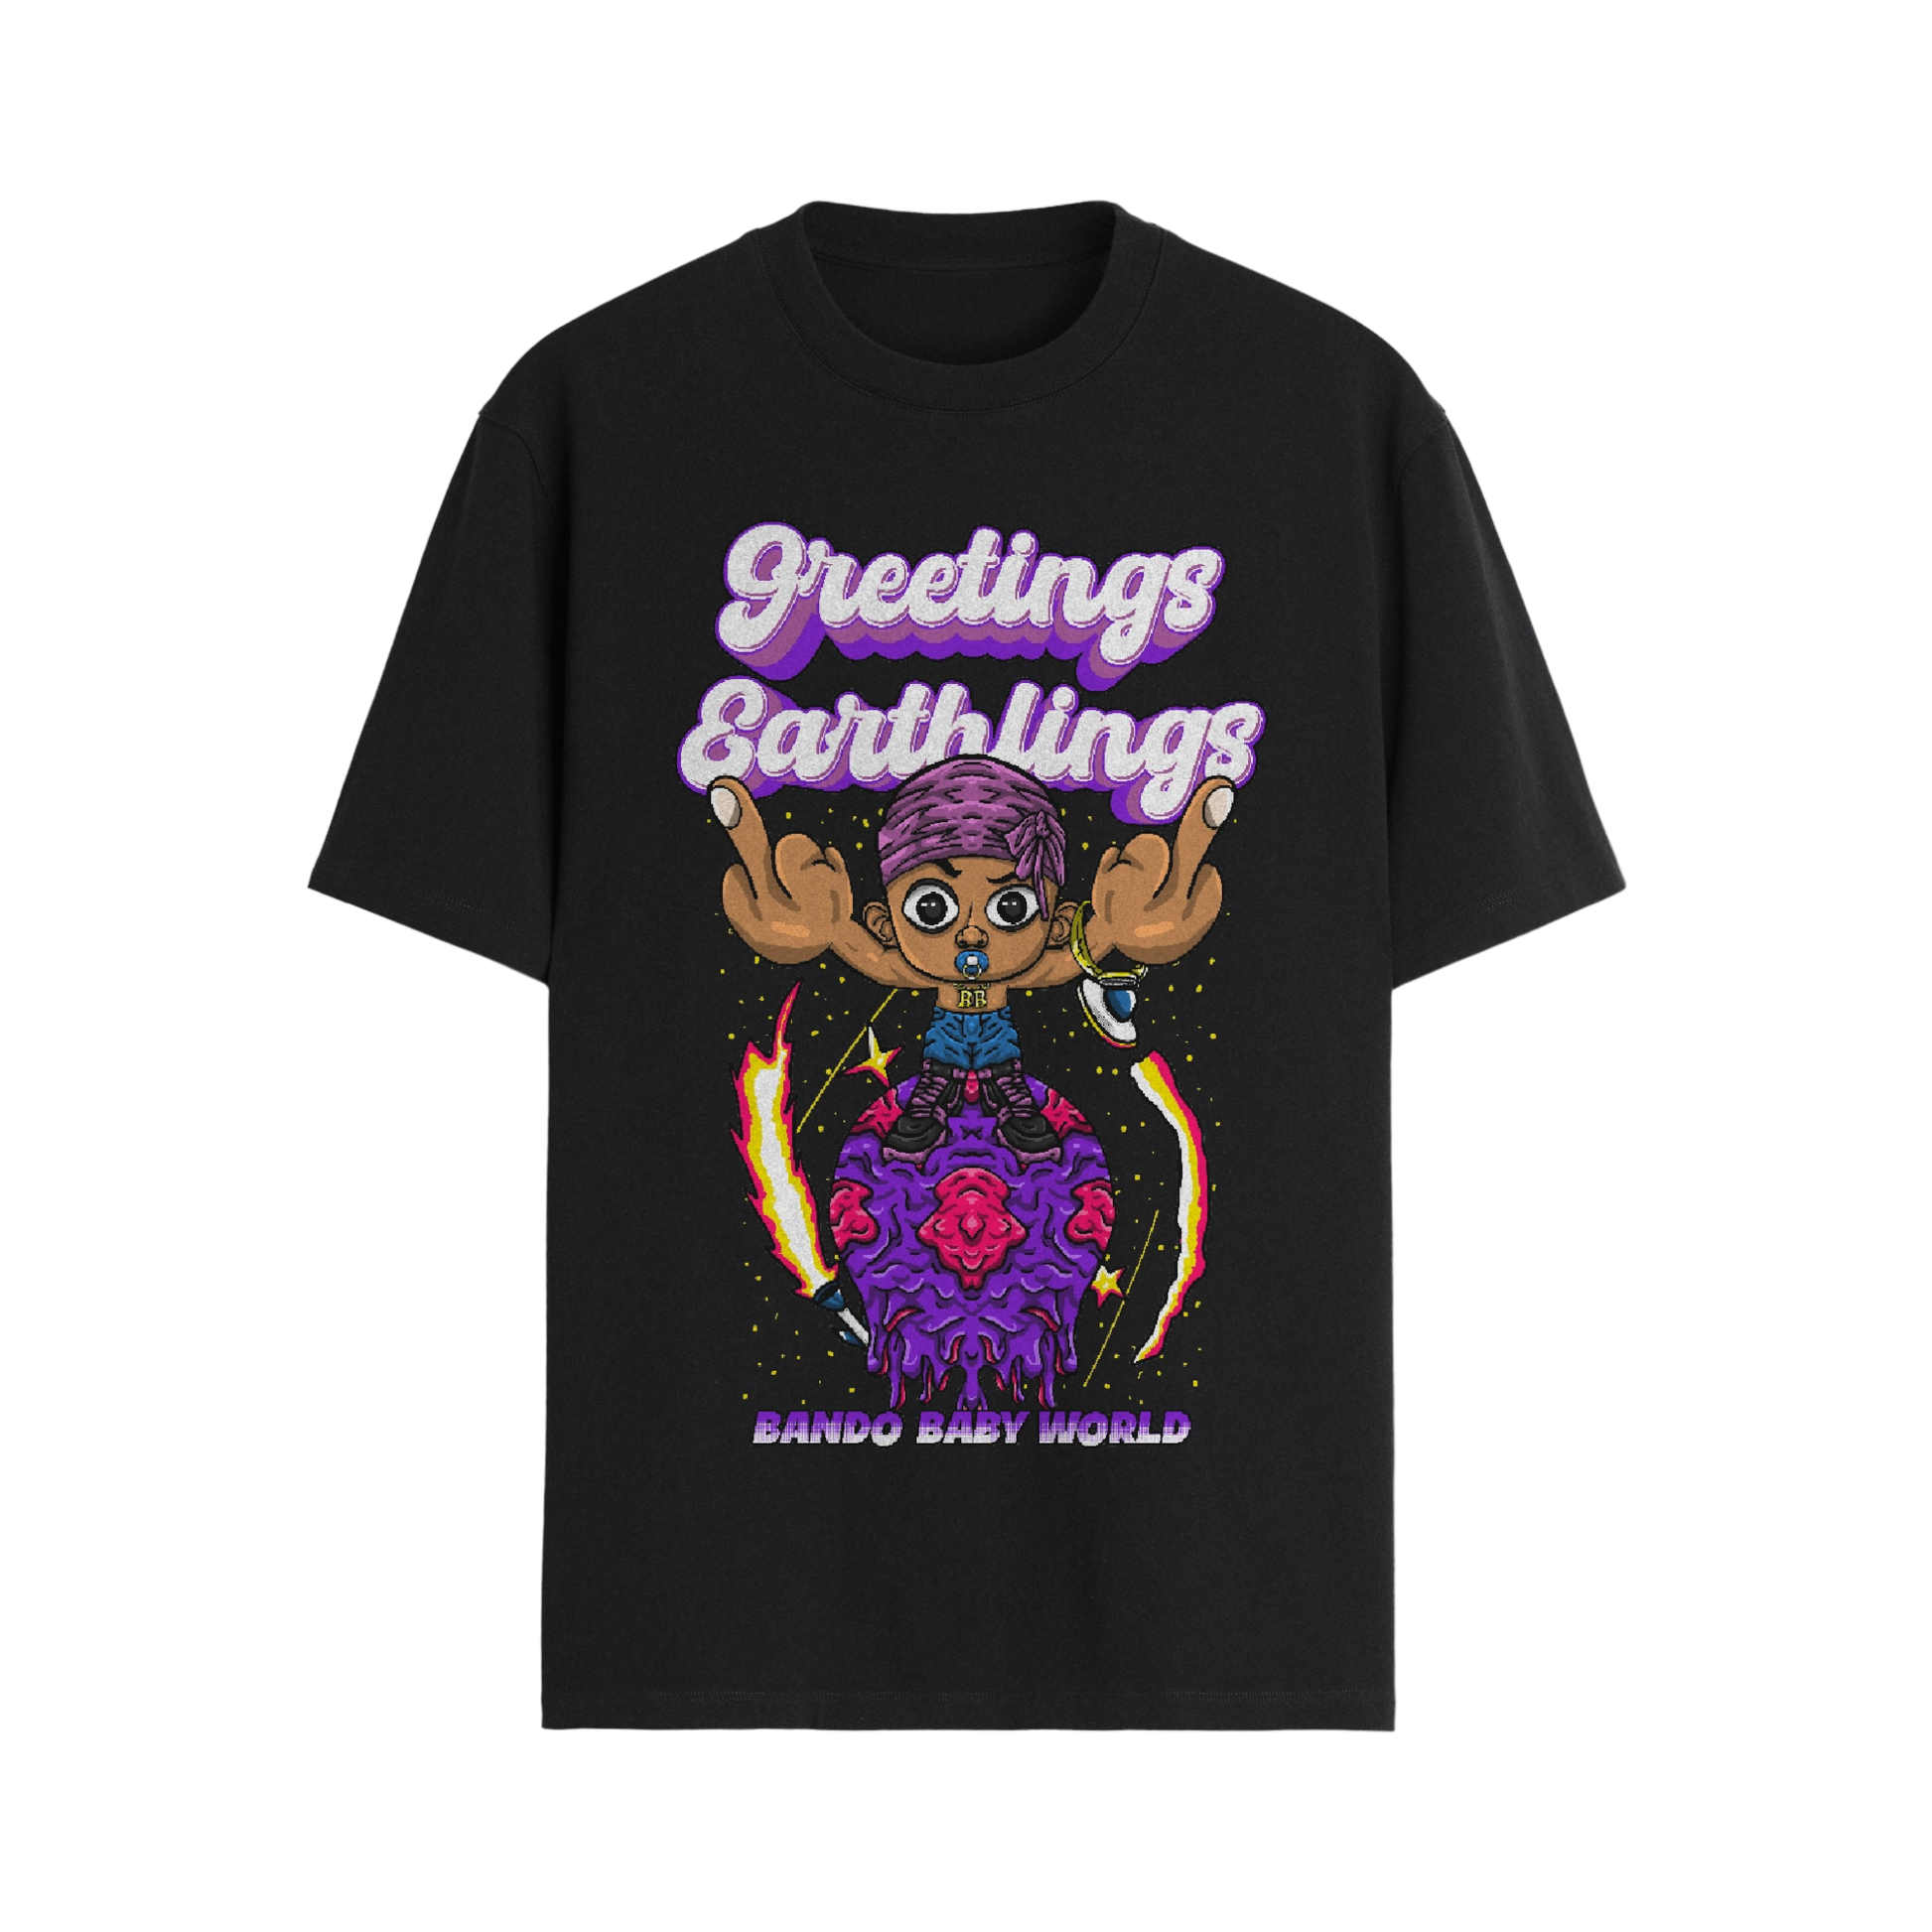 Greetings Earthlings T-shirt - Bando Baby 